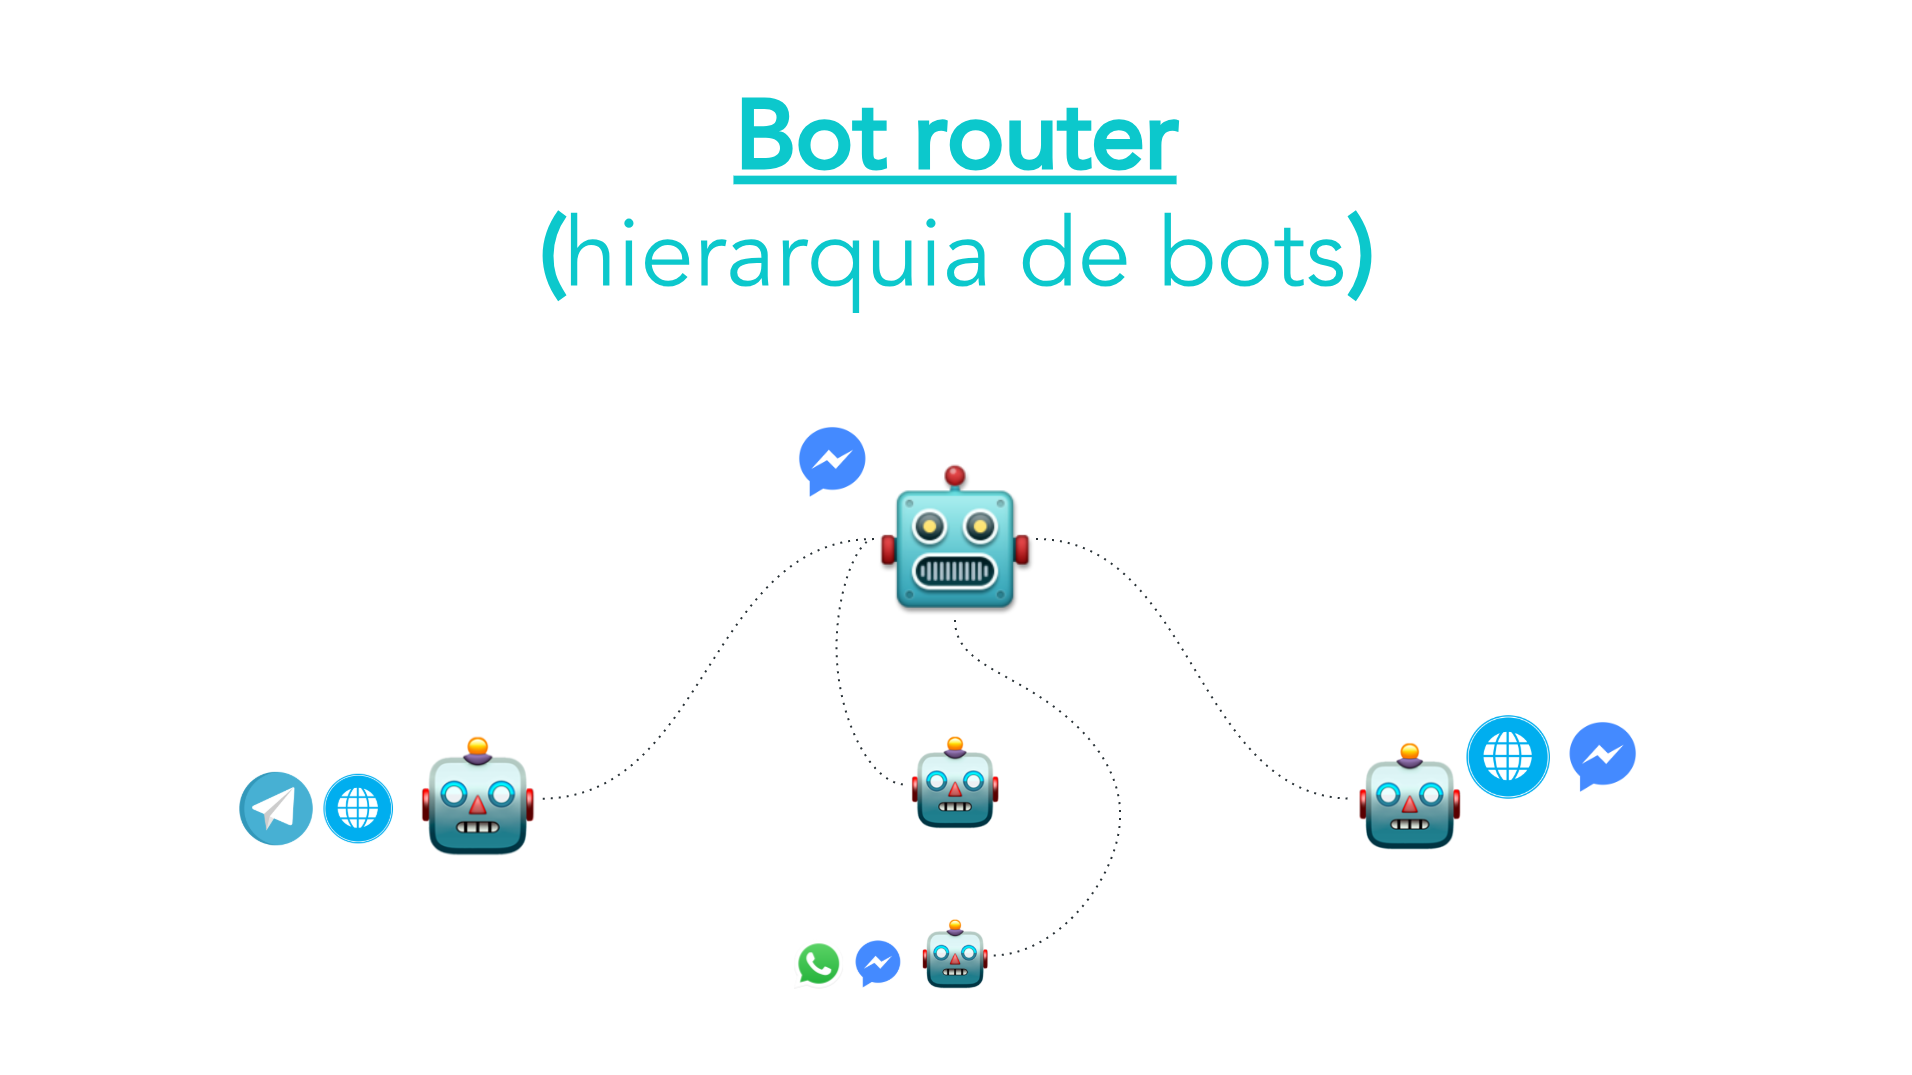 Bot router arquitetura